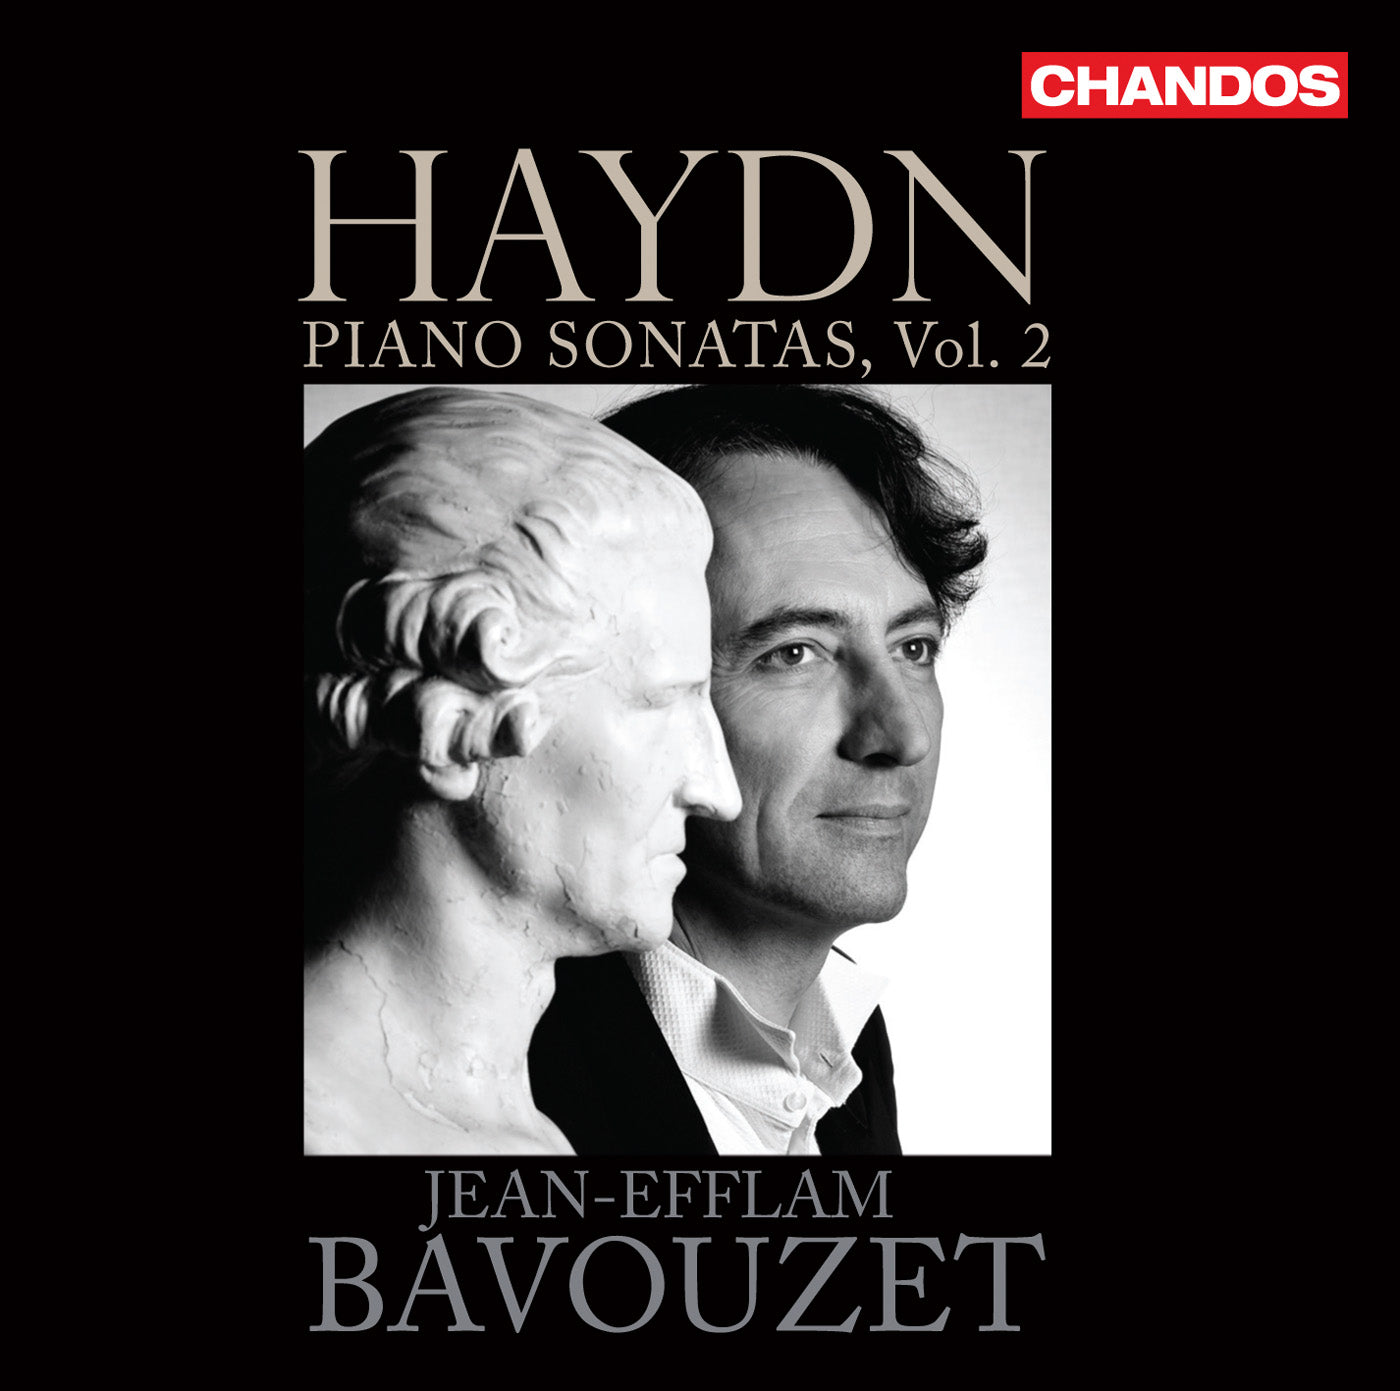 Haydn: The Complete Piano Sonatas, Vol. 2 / Bavouzet